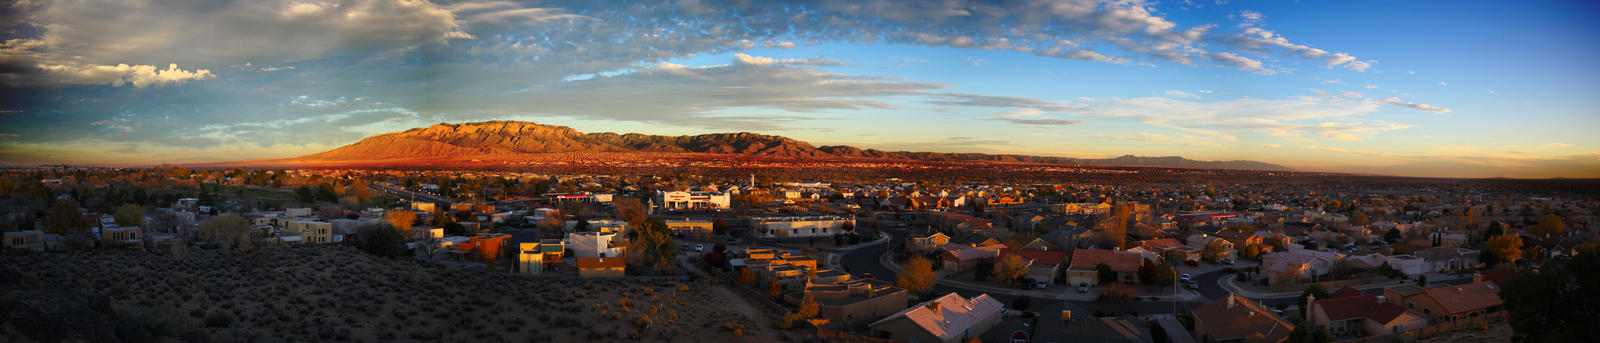 Reflection of an Albuquerque Sunset